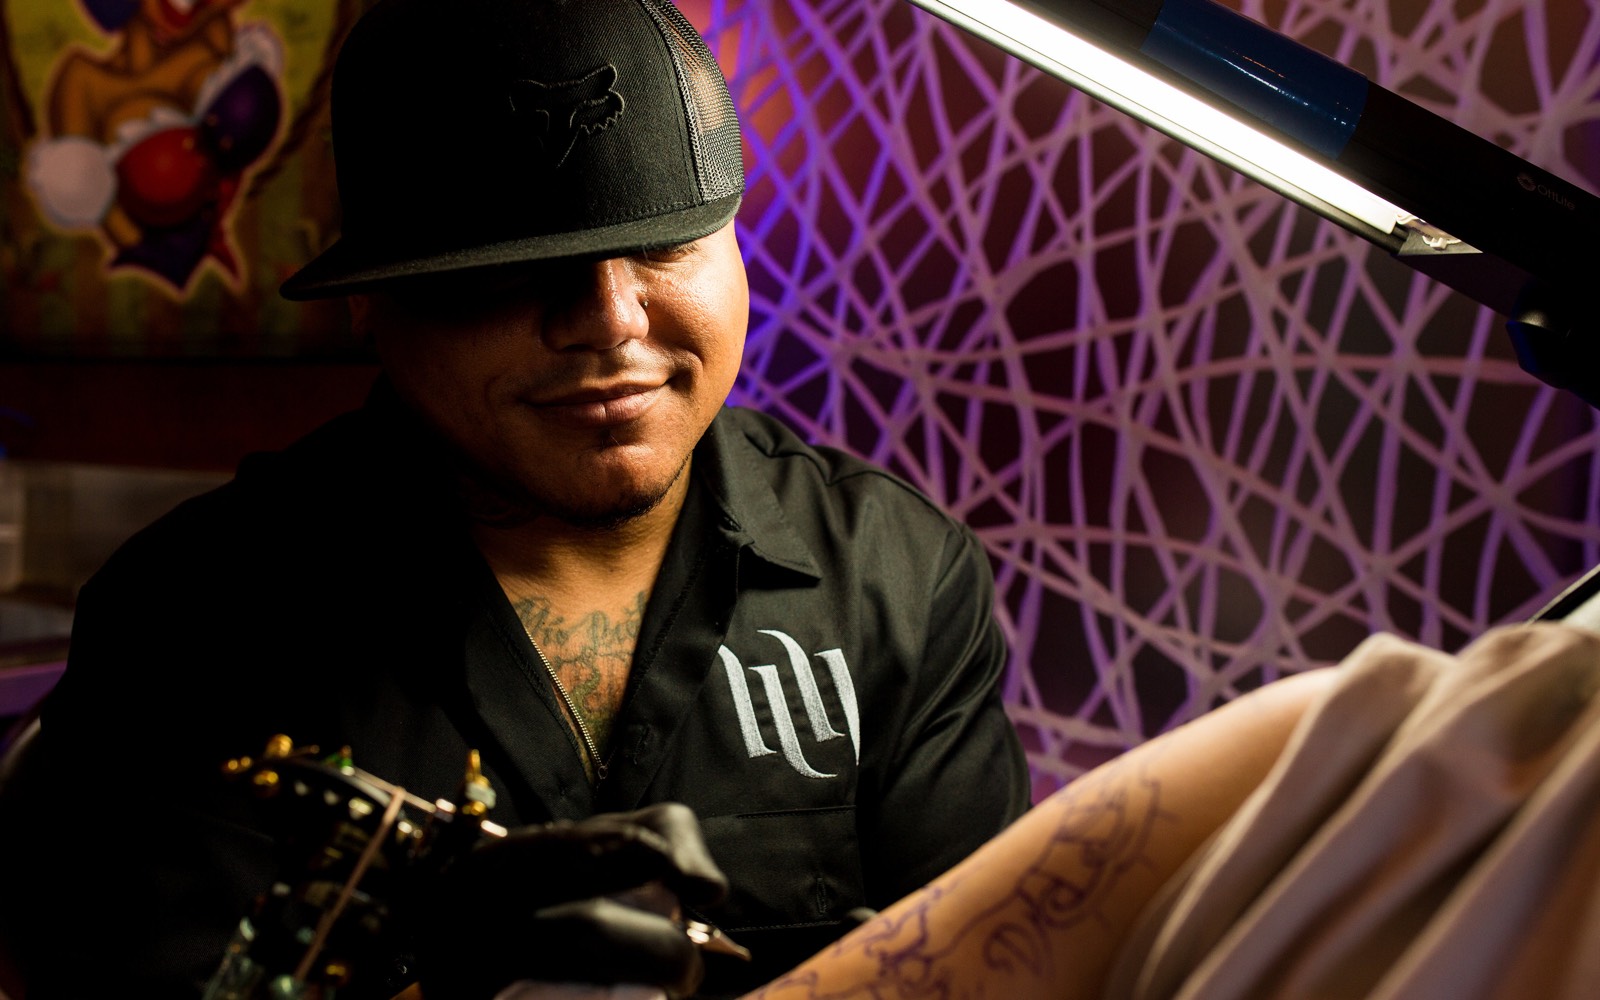 Waylon Jennings  Ol Waylon Waylon Jennings tattoo by Tattoos by John  Roberts on Chris Rhyason  Facebook